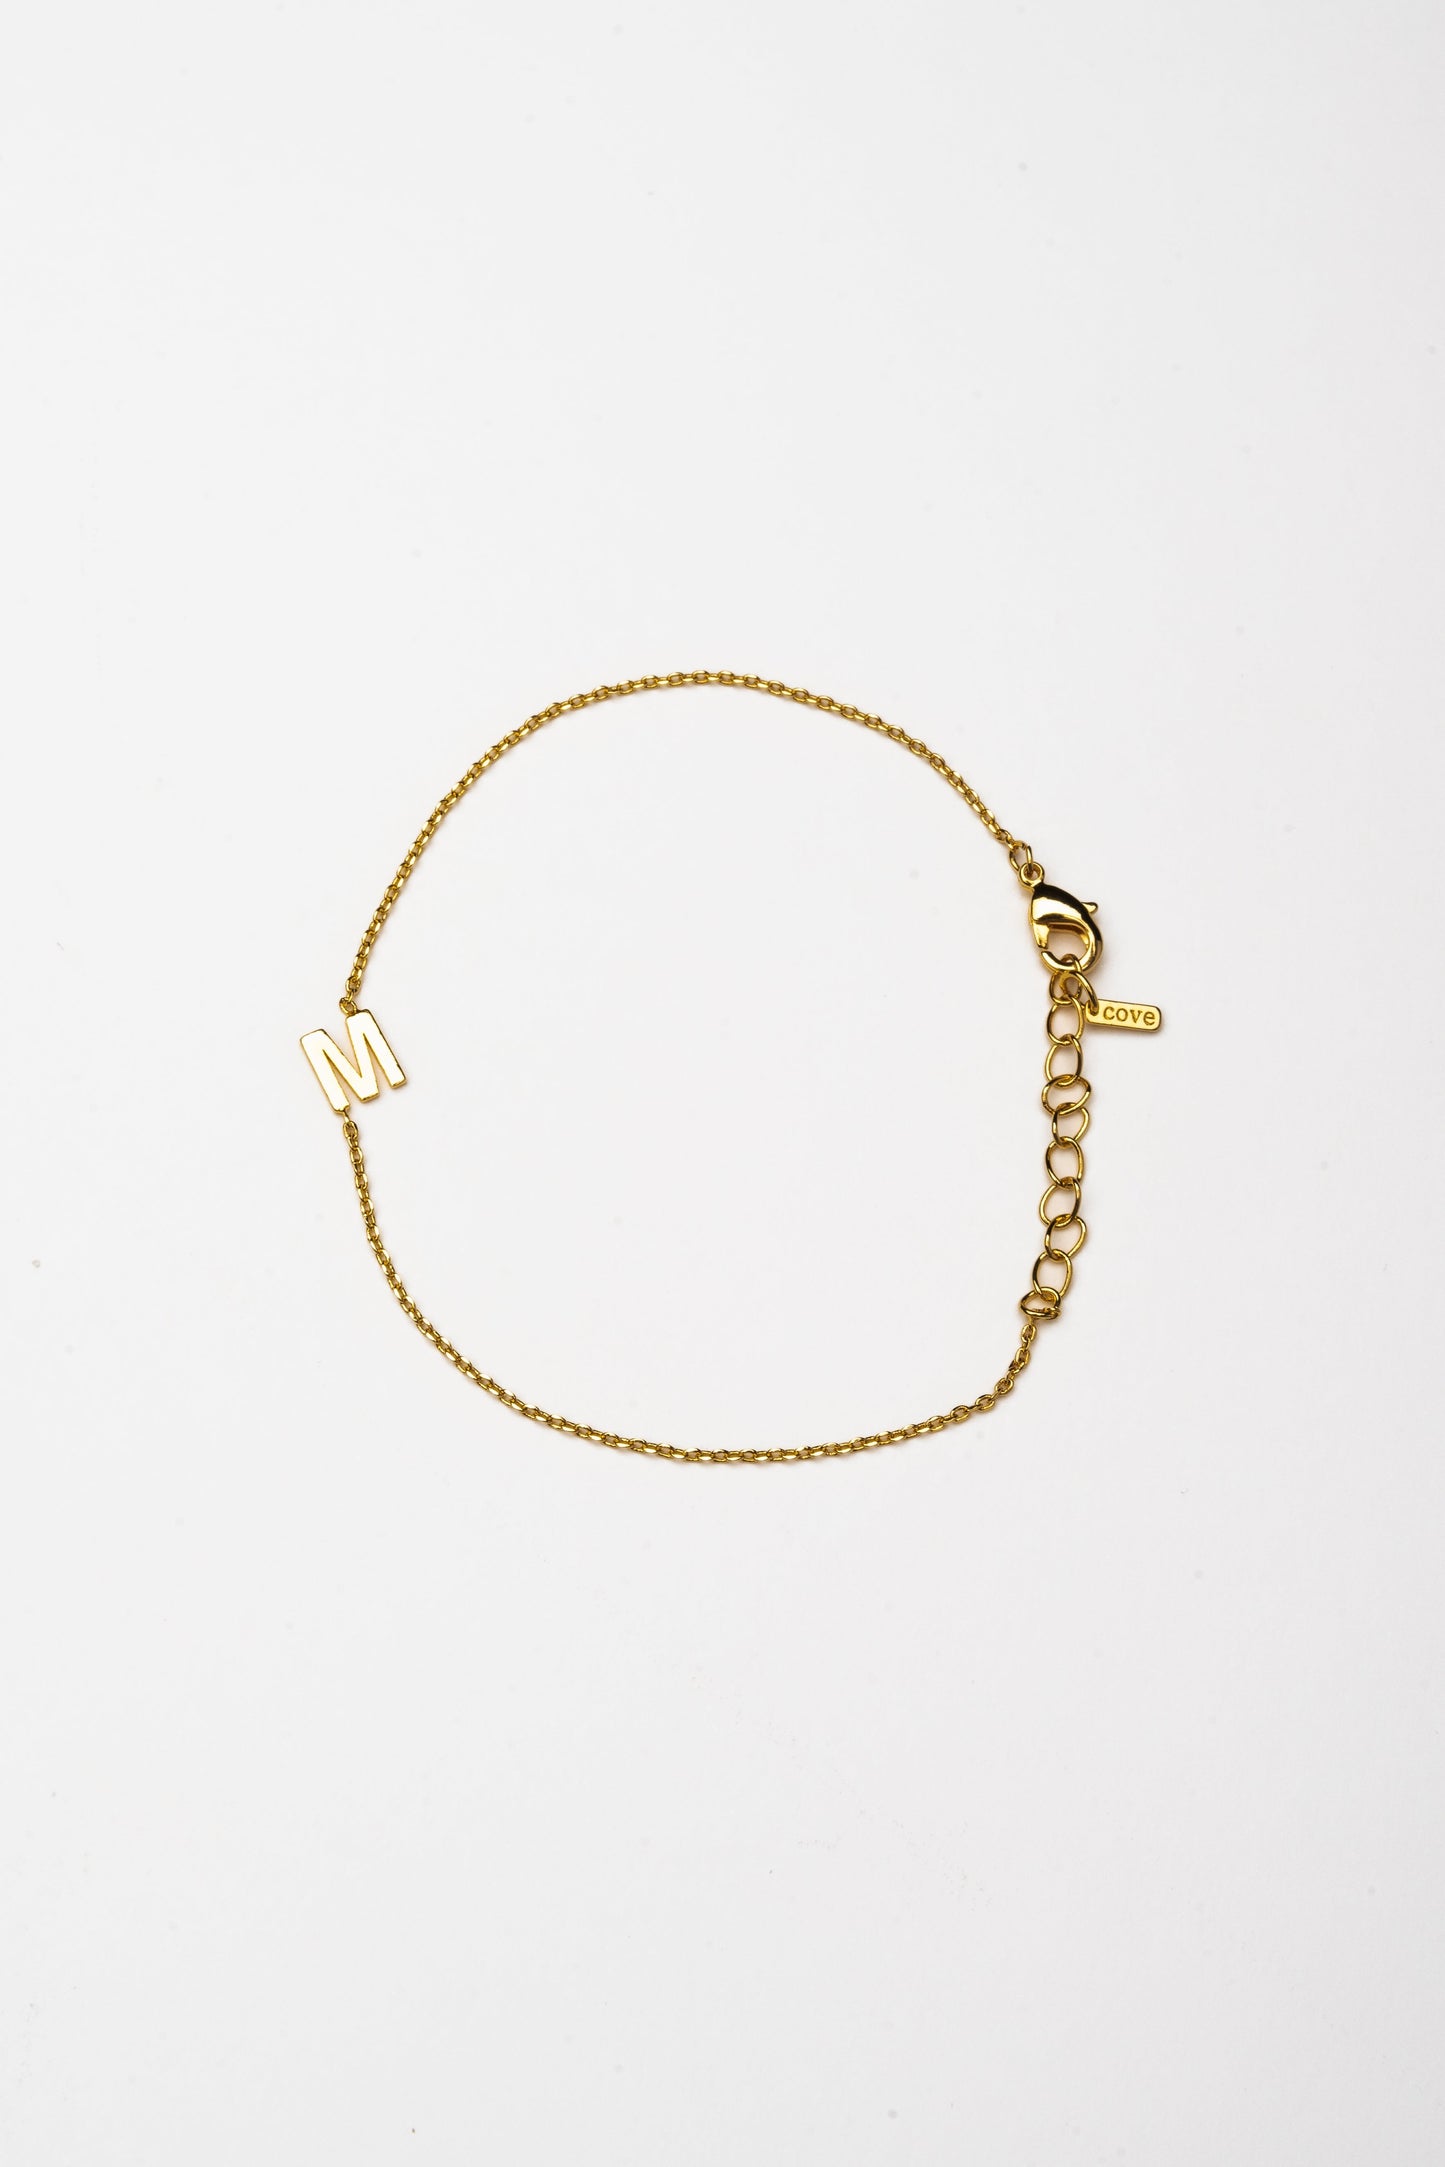 Cove Initial Bracelet WOMEN'S BRACELET Cove Accessories 18k Gold Plated 7" + 1" extender M